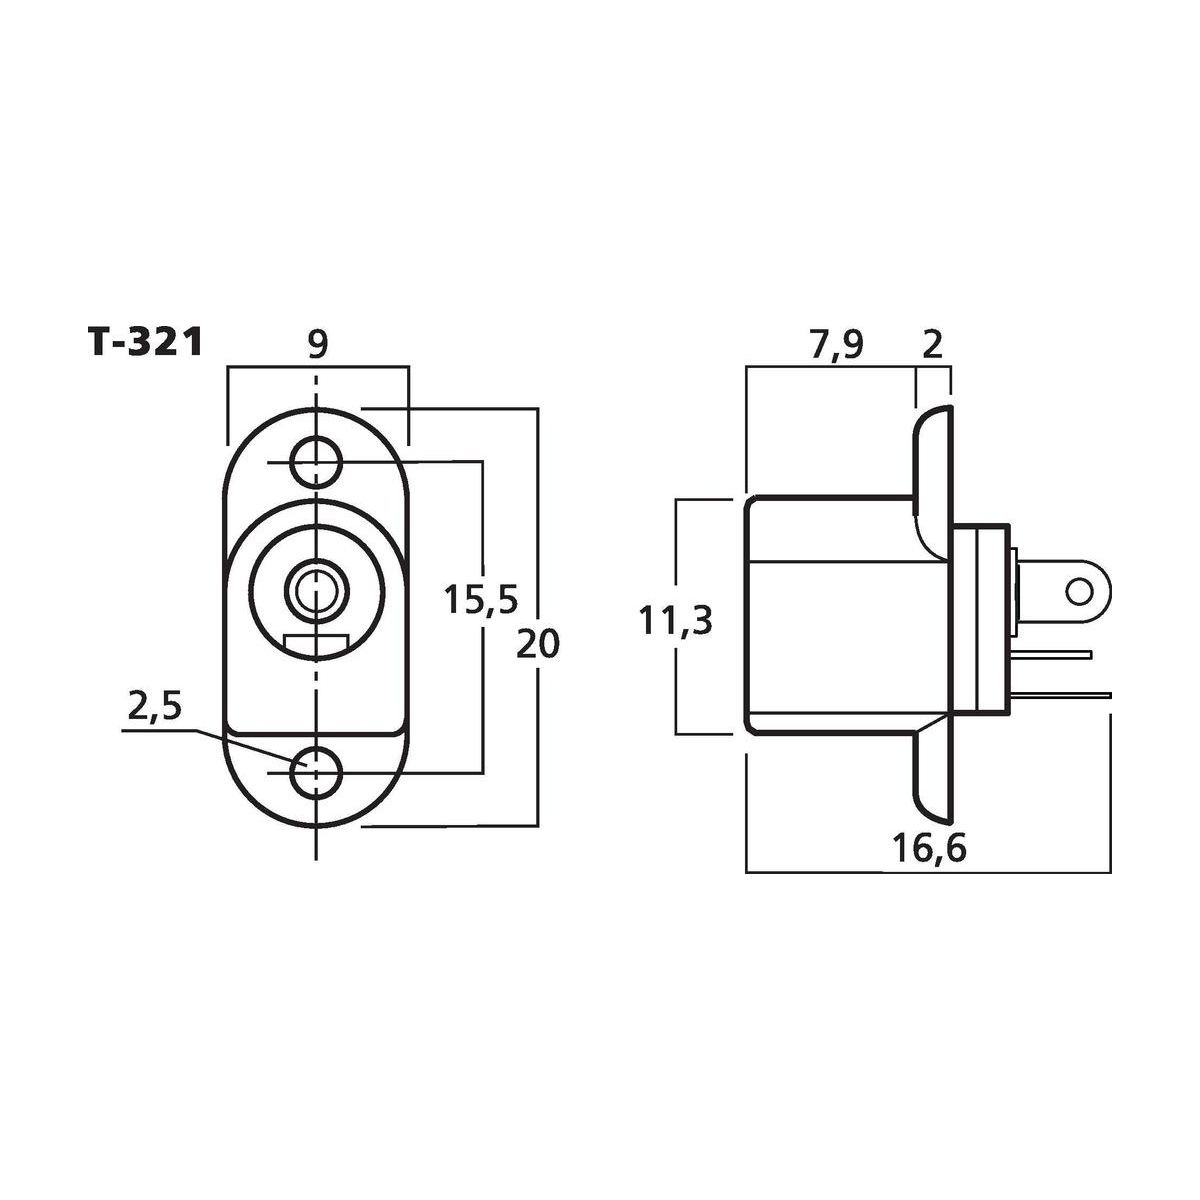 T-321 | Low-voltage panel jack, 5.5/2.1 mm-6226